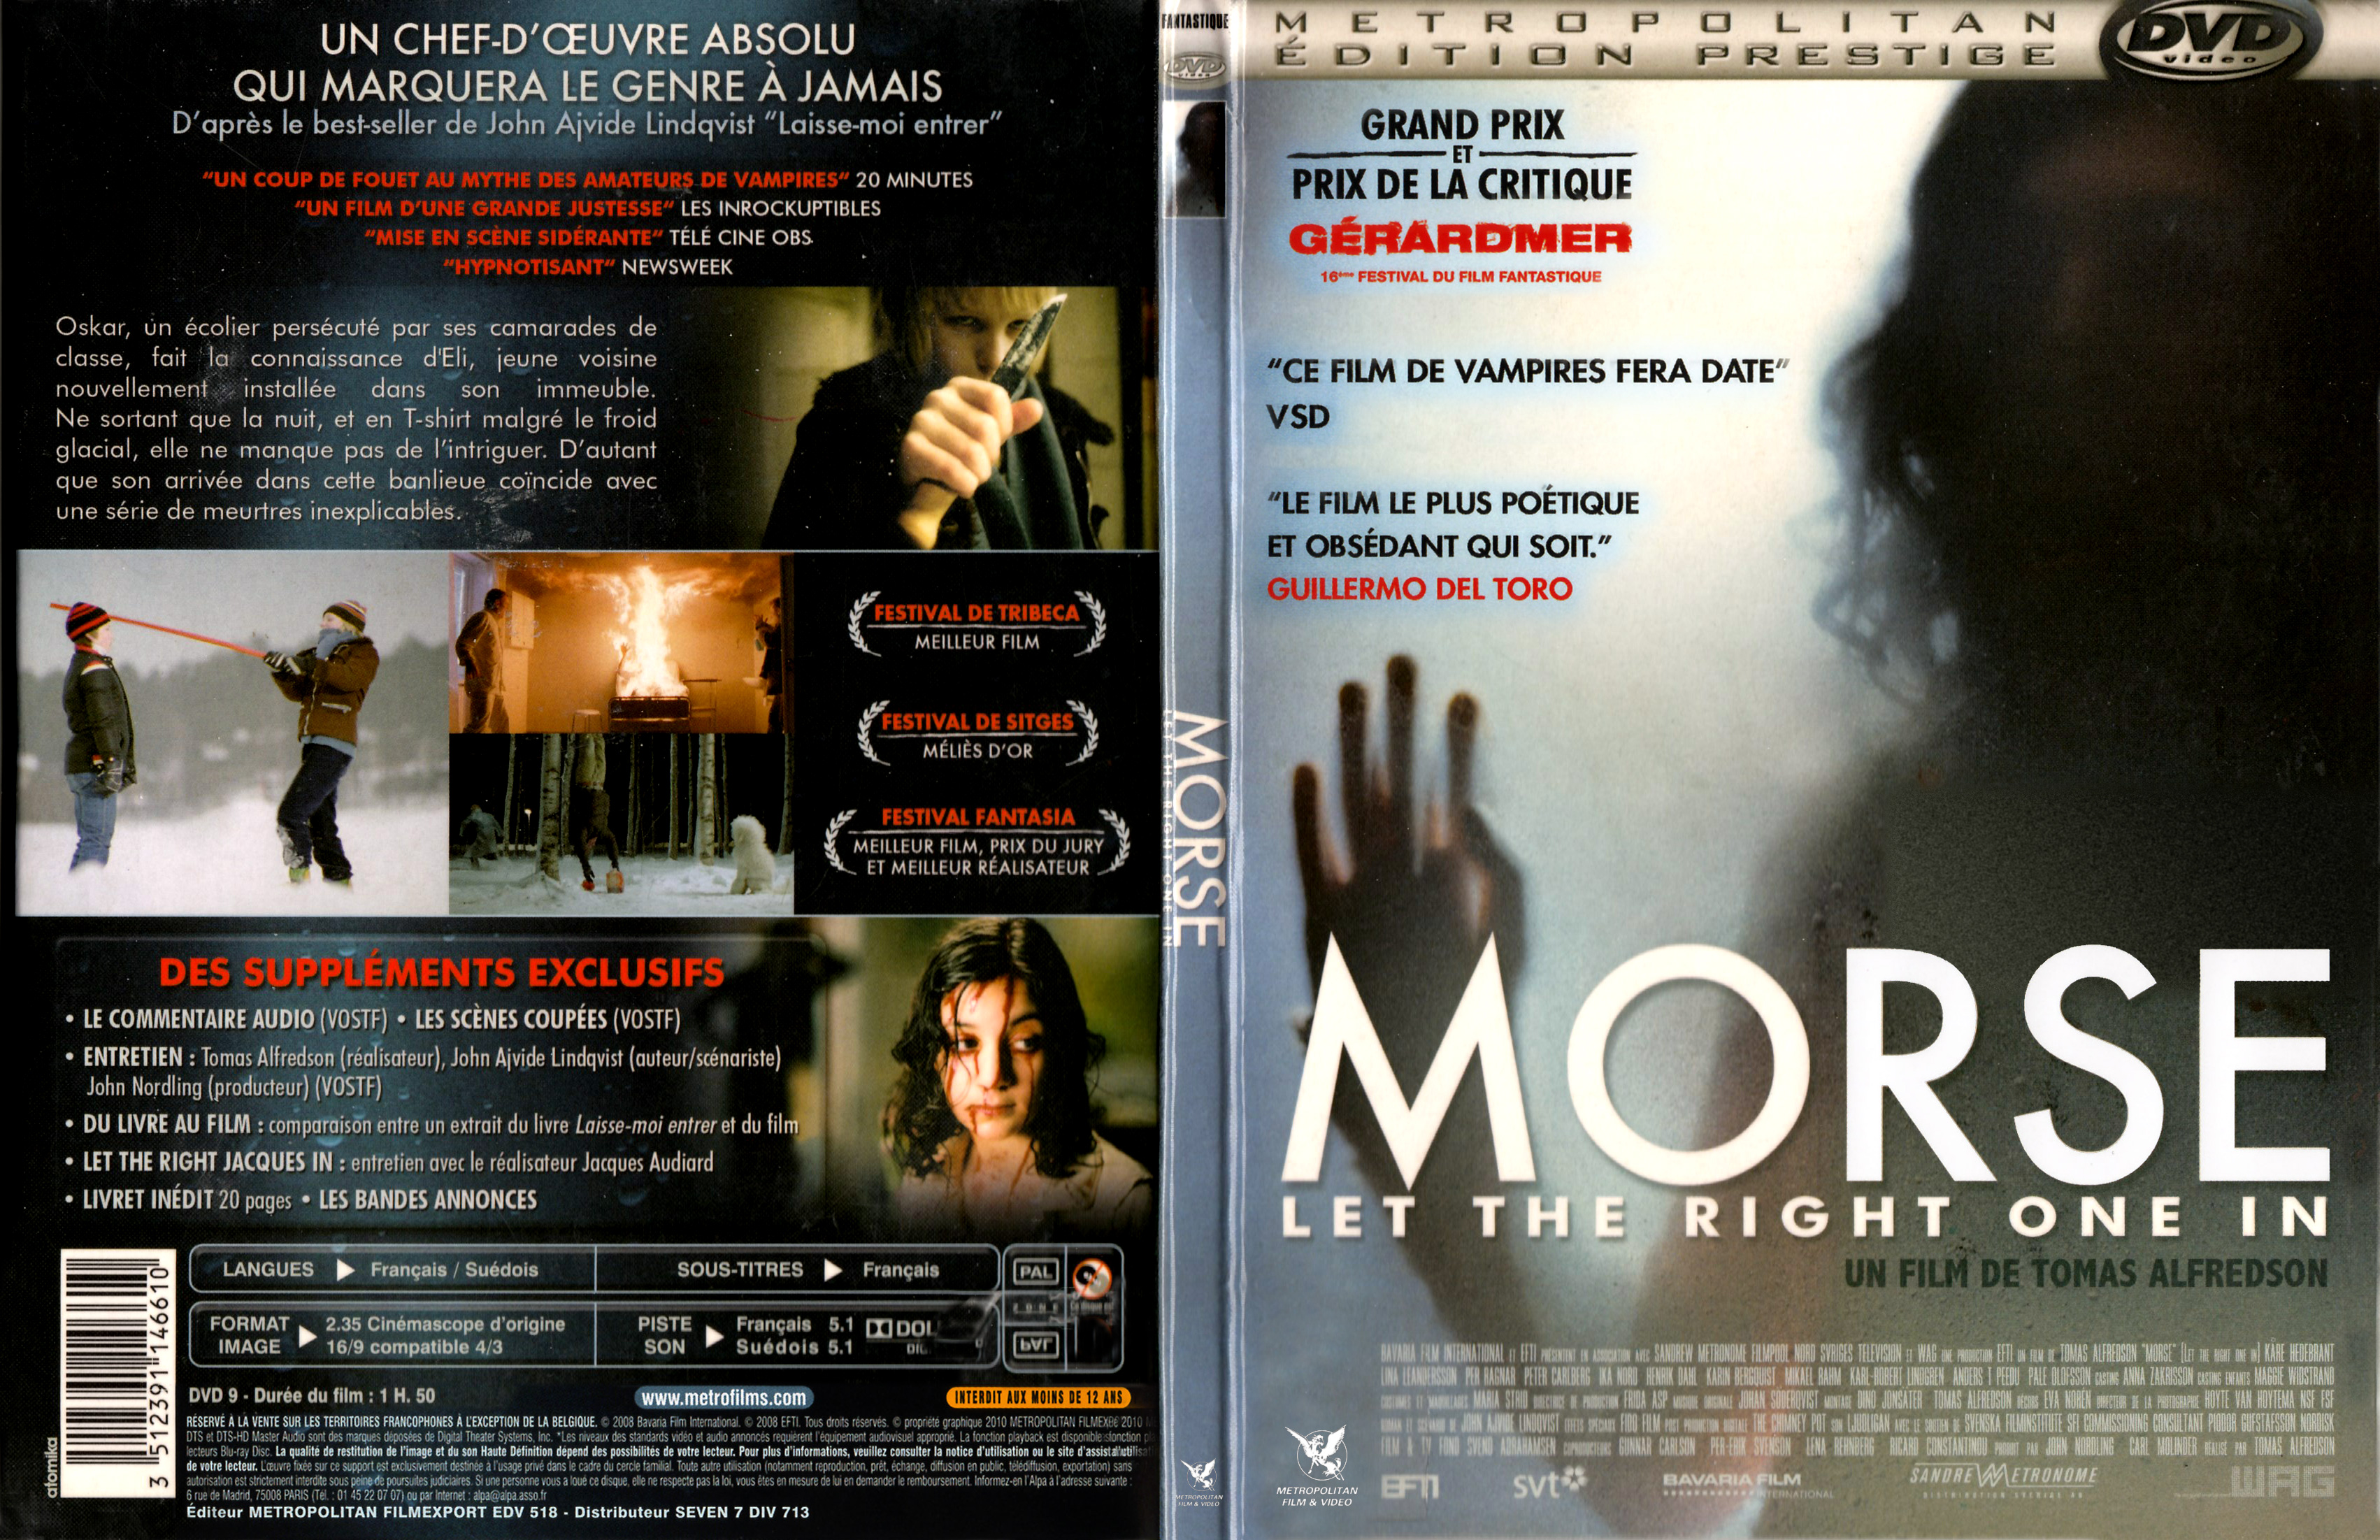 Jaquette DVD Morse